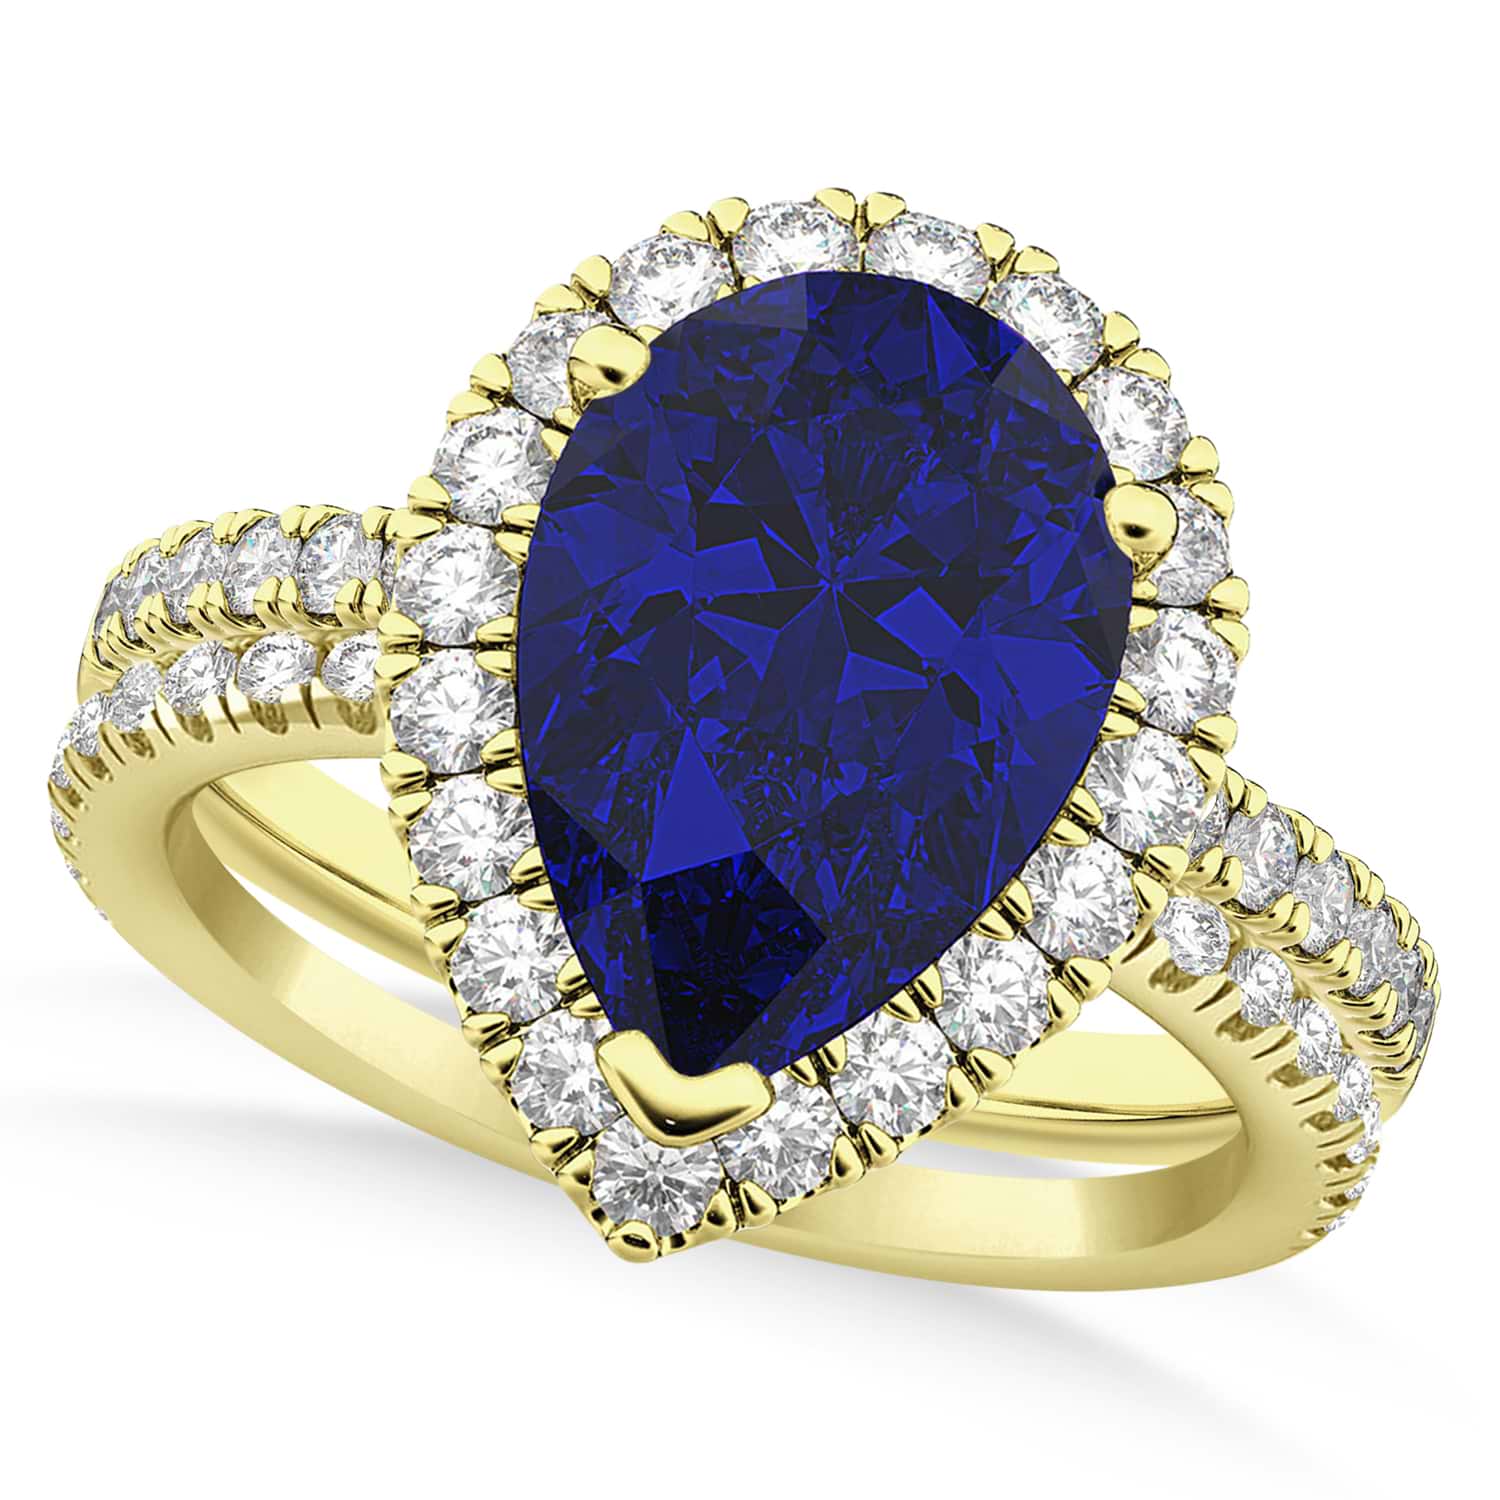 Blue Sapphire & Diamonds Pear-Cut Halo Bridal Set 14K Yellow Gold (3.28ct)